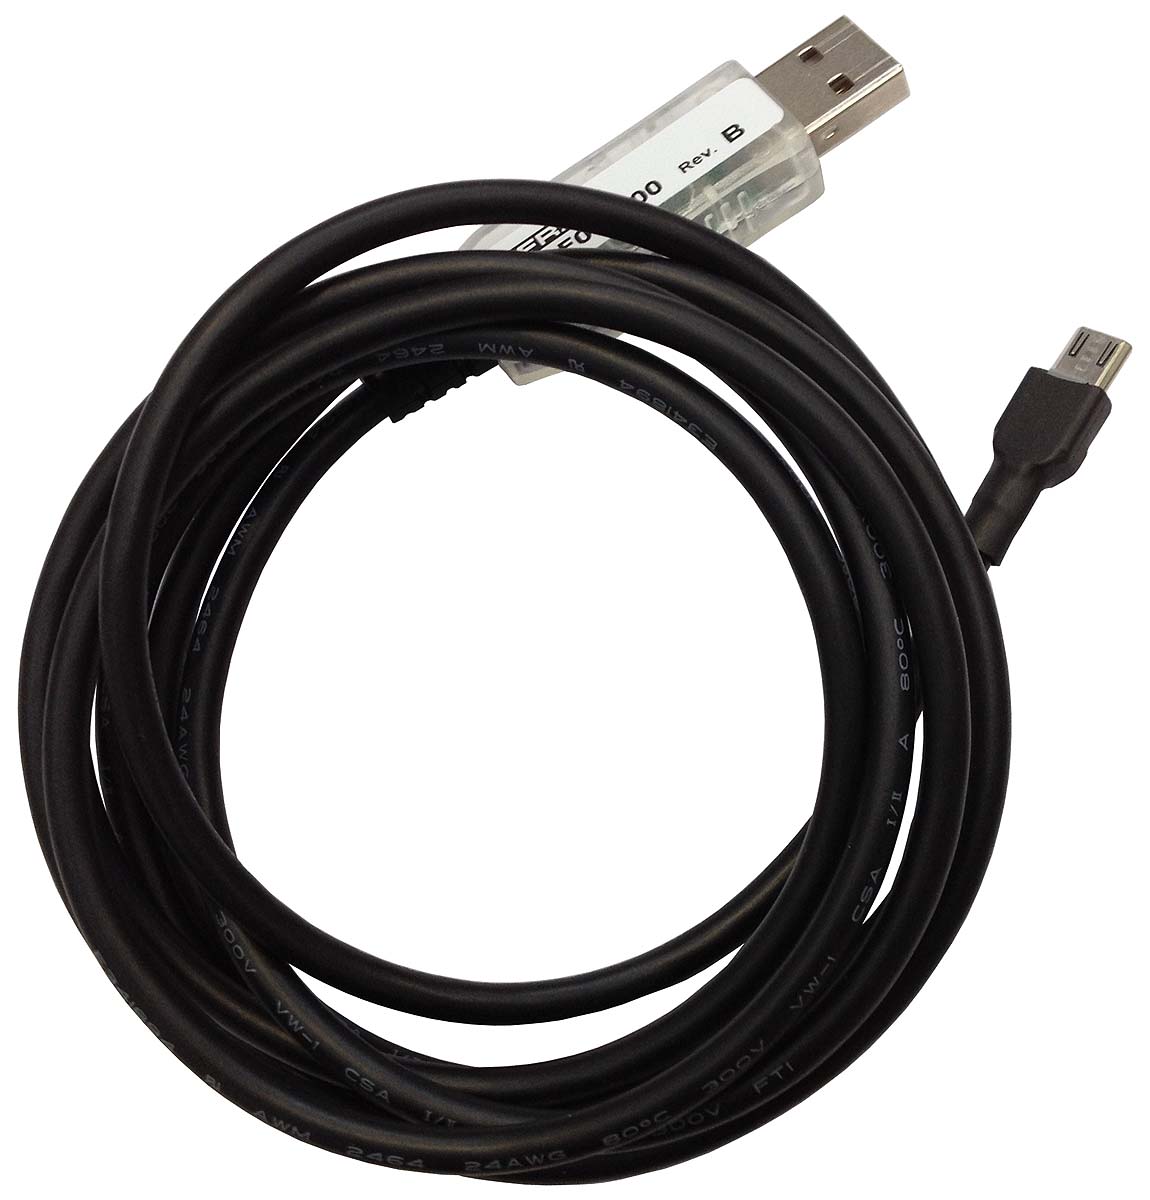 Gefran USB Cable, 1.8m